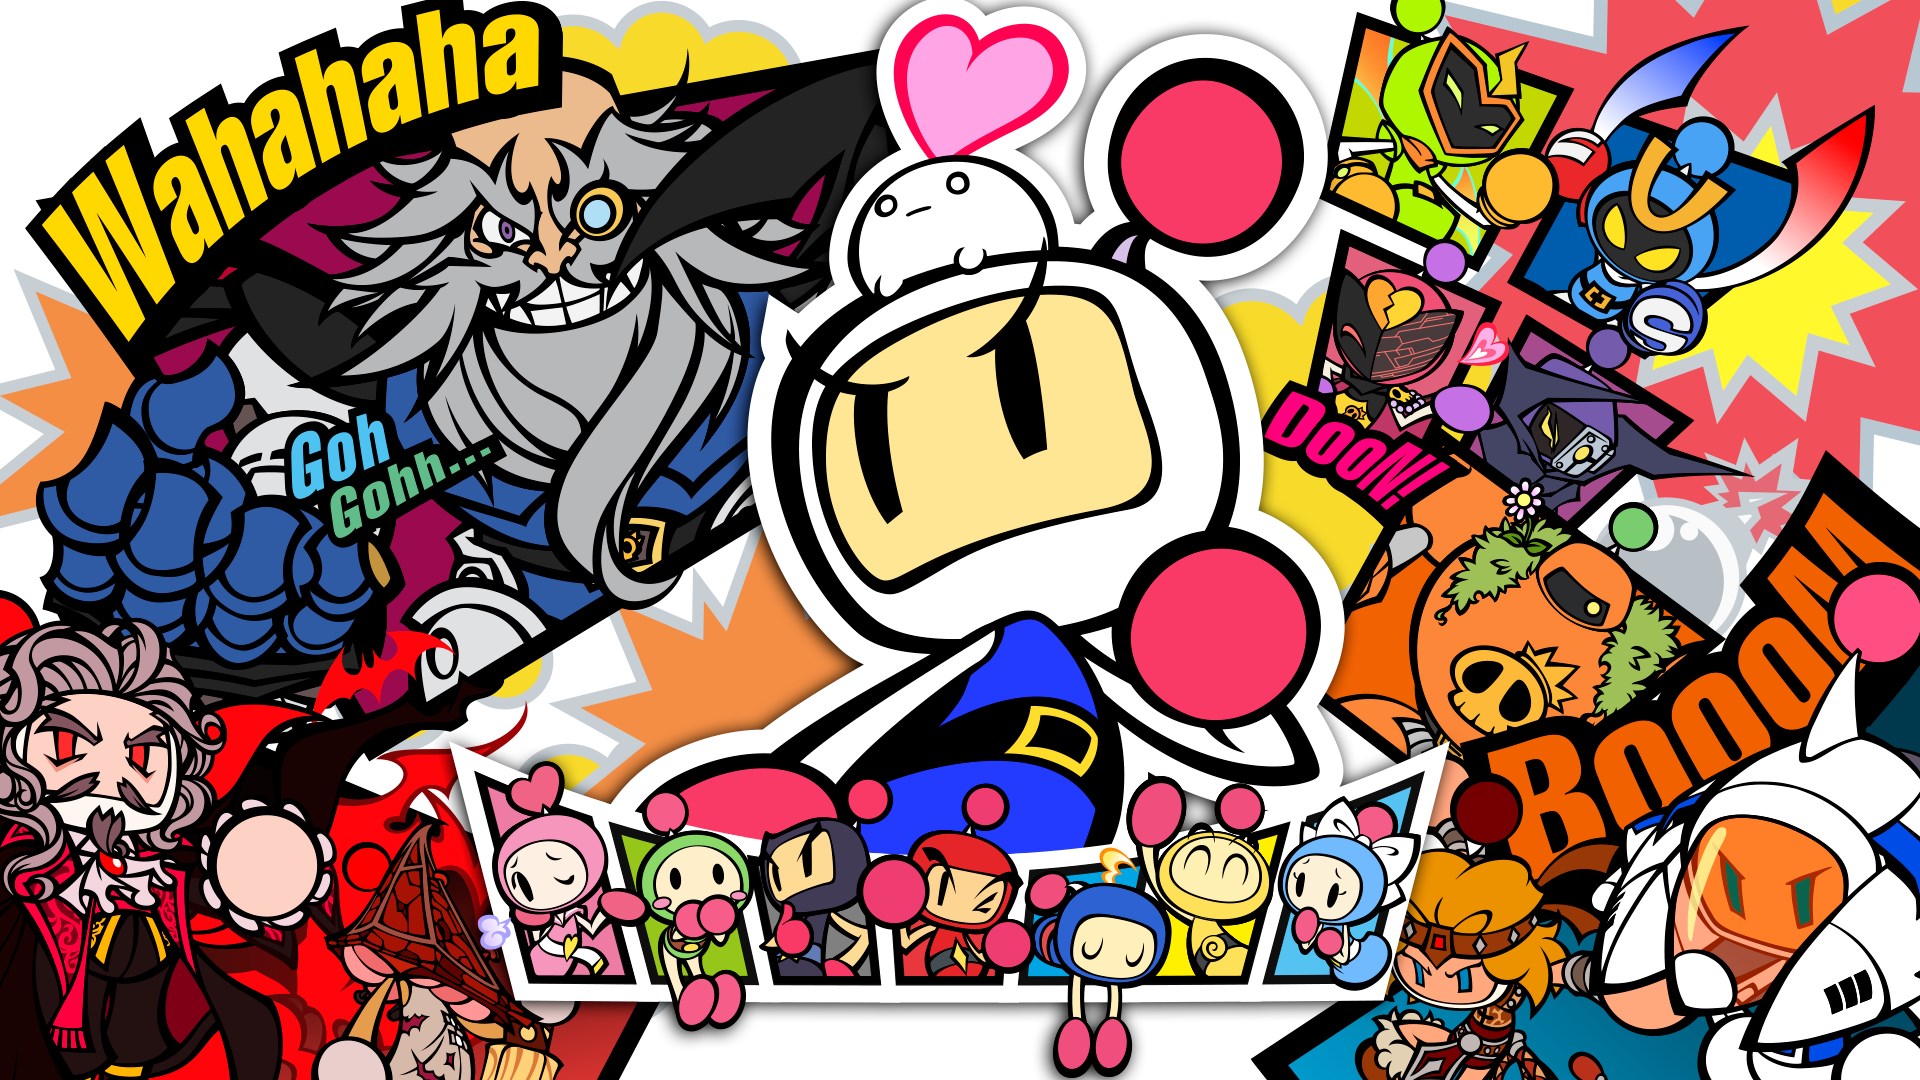 Super Bomberman R Nintendo Switch [Digital] Digital Item - Best Buy